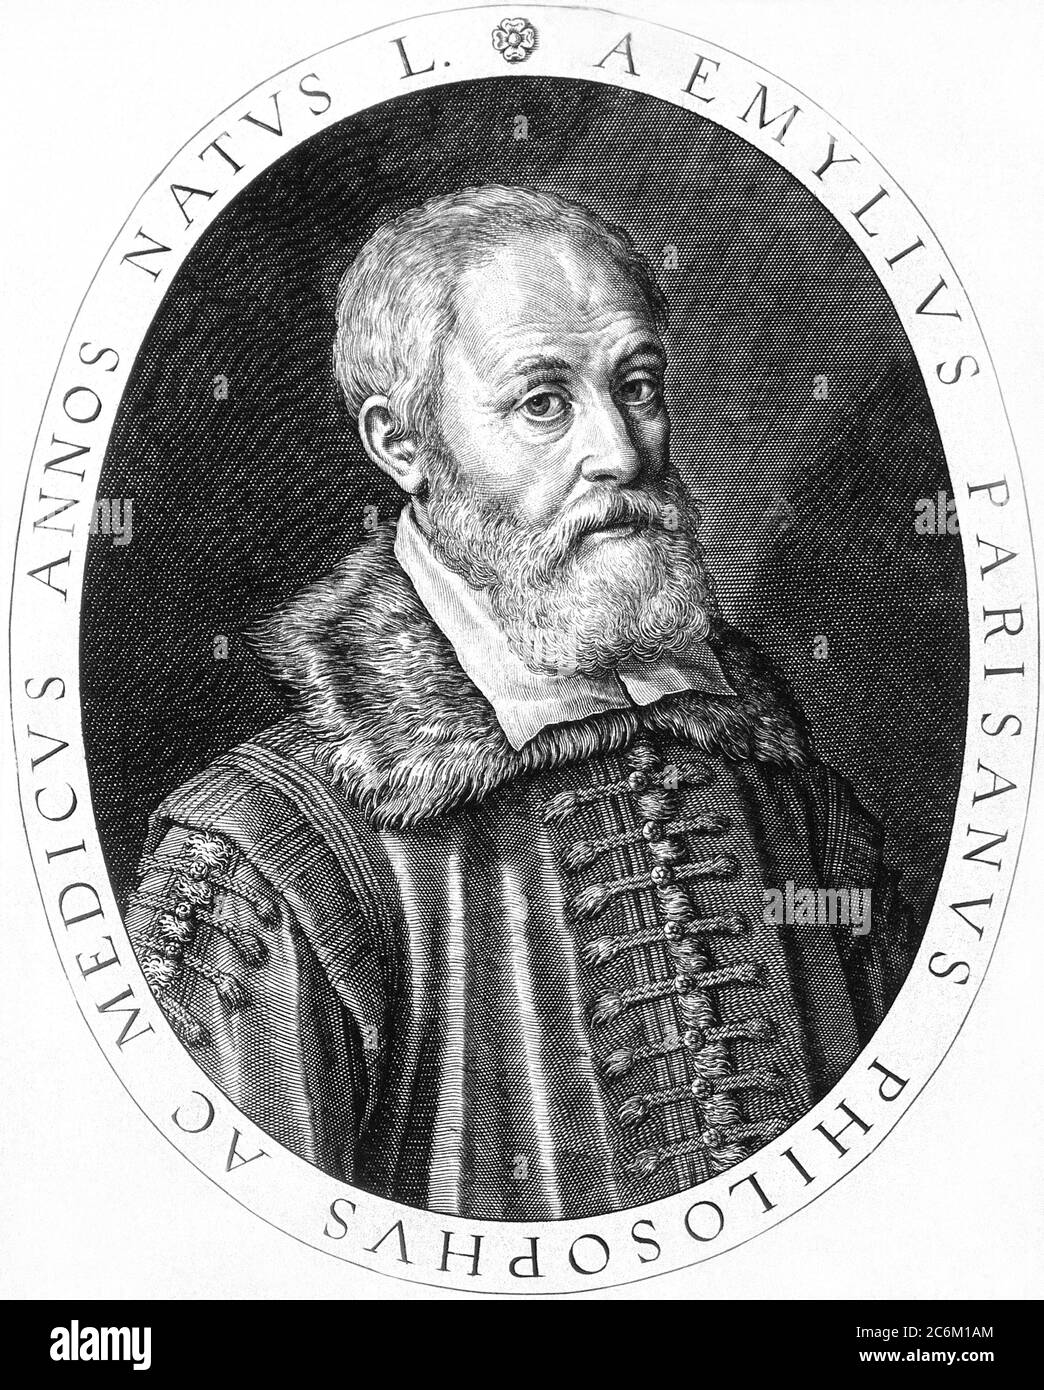 1640 c , ITALY : The italian anatomist , physician and philosopher Aemilius Parisanus aka EMILIO PARISANO ( 1567 - 1643 ). Portrait engraved by R. Sadeler after Pietro Mera , 1617 . - Aemylii Parisani - ANATOMIA - ANATHOMY - ANATOMIST - ANATOMISTA - HISTORY - foto storiche - scientist - portrait - ritratto - ITALIA - DOTTORE - MEDICO - MEDICINA - medicine - SCIENZA - SCIENCE -  DOTTORE - MEDICIAN - illustrazione - illustration - engraving - incisione - collar - colletto - beard - barba - ITALIA - FILOSOFO - PHILOSOPHY - FILOSOFIA - PHILOSOPHER --- Archivio GBB Stock Photo